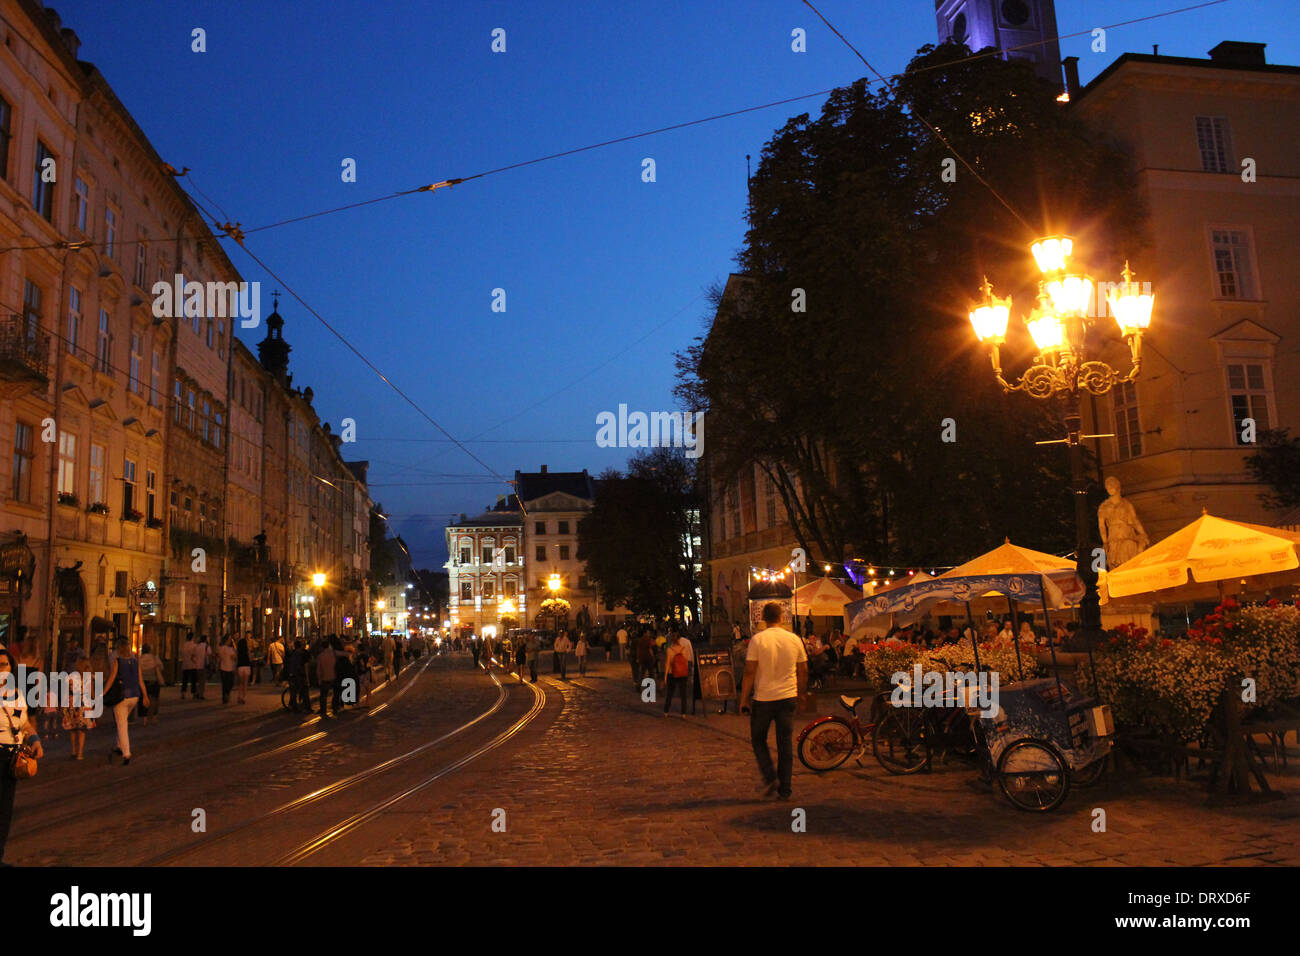 illuminated street of night Lviv city with many lanterns Stock Photo